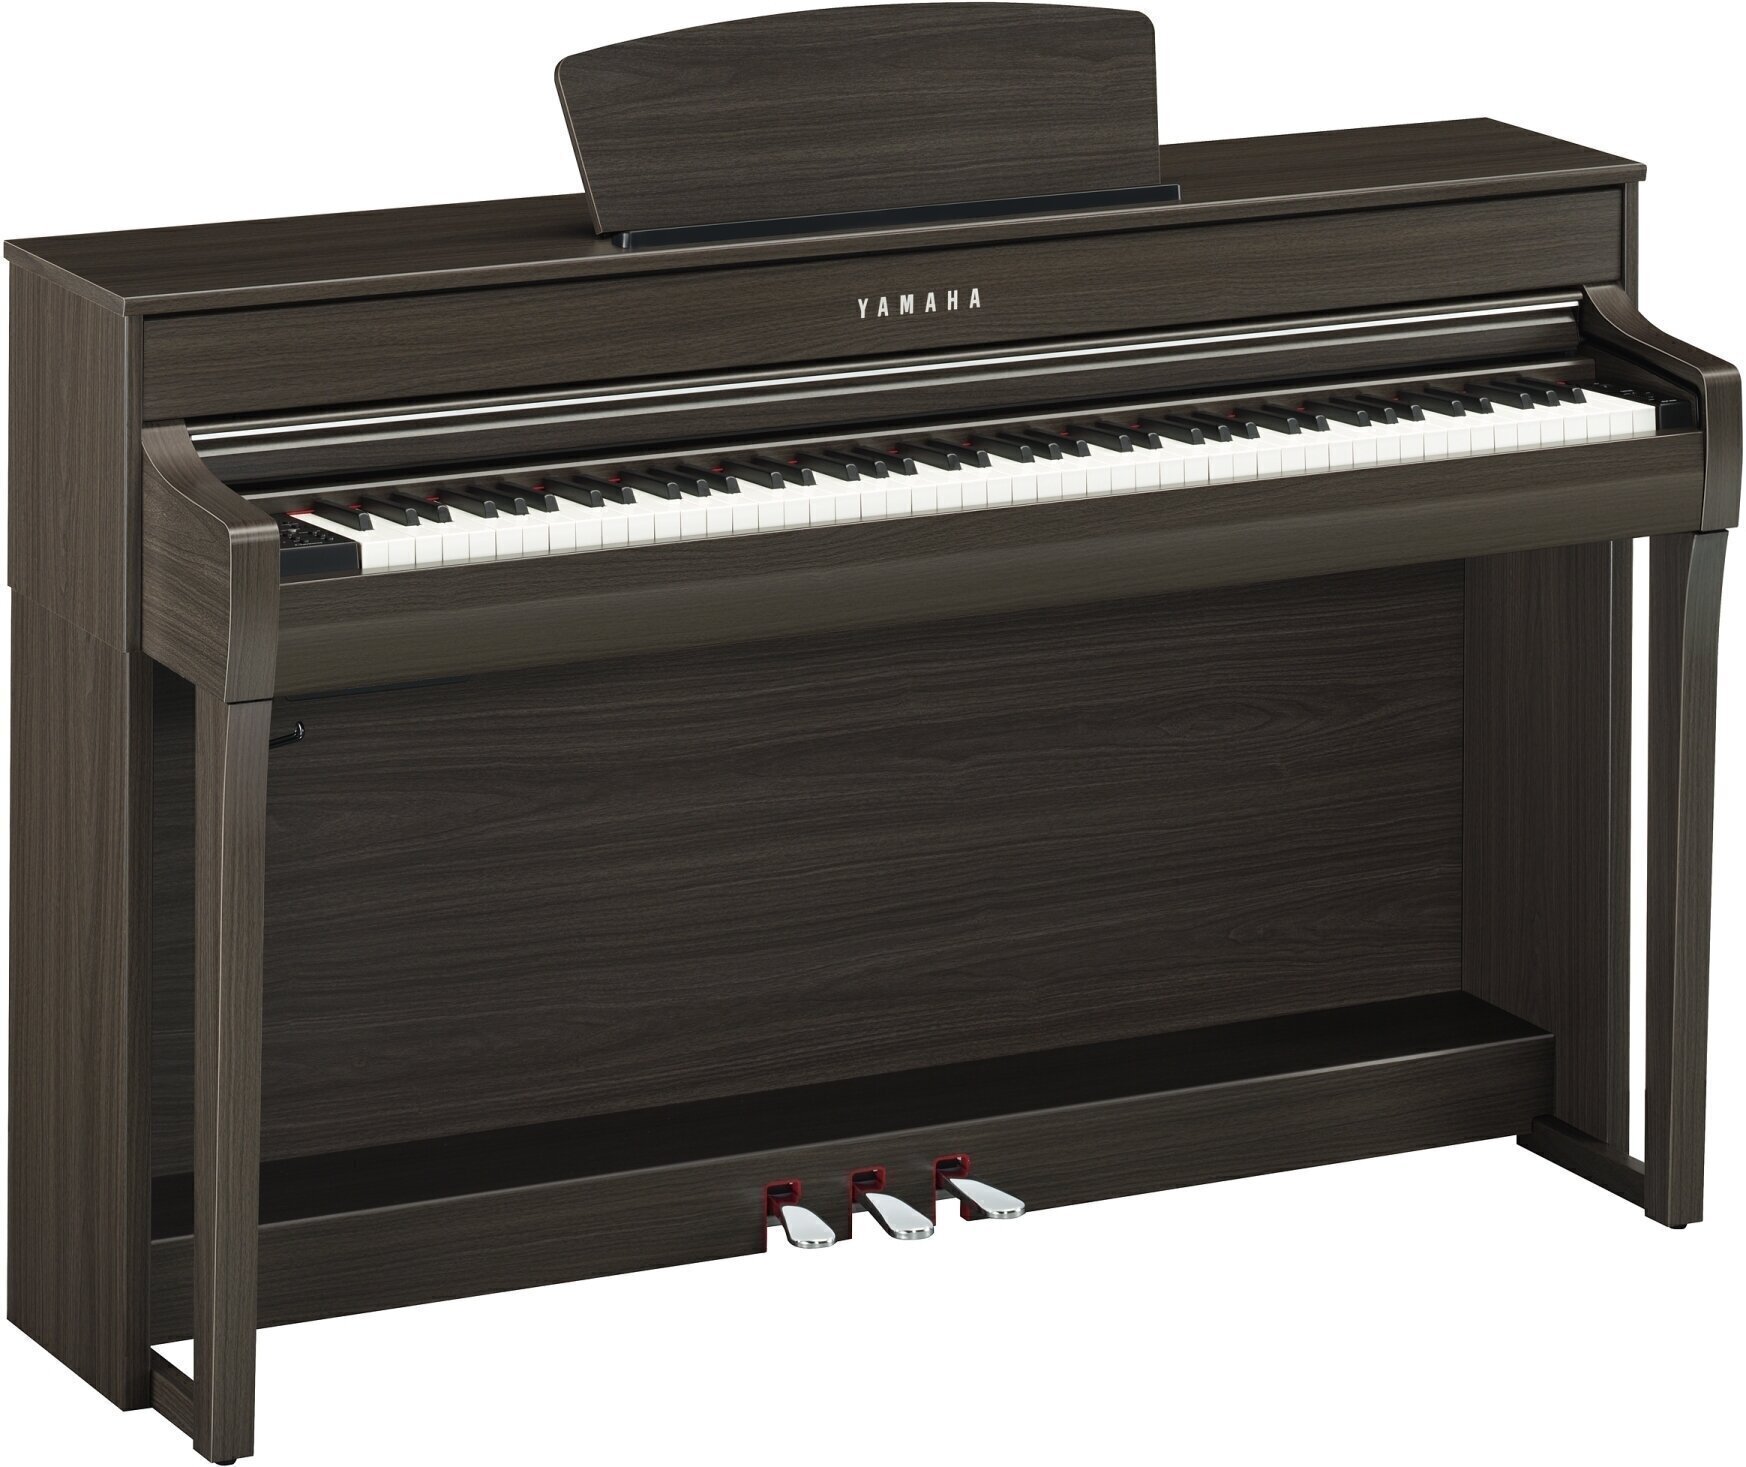 Piano digital Yamaha CLP 735 Dark Walnut Piano digital